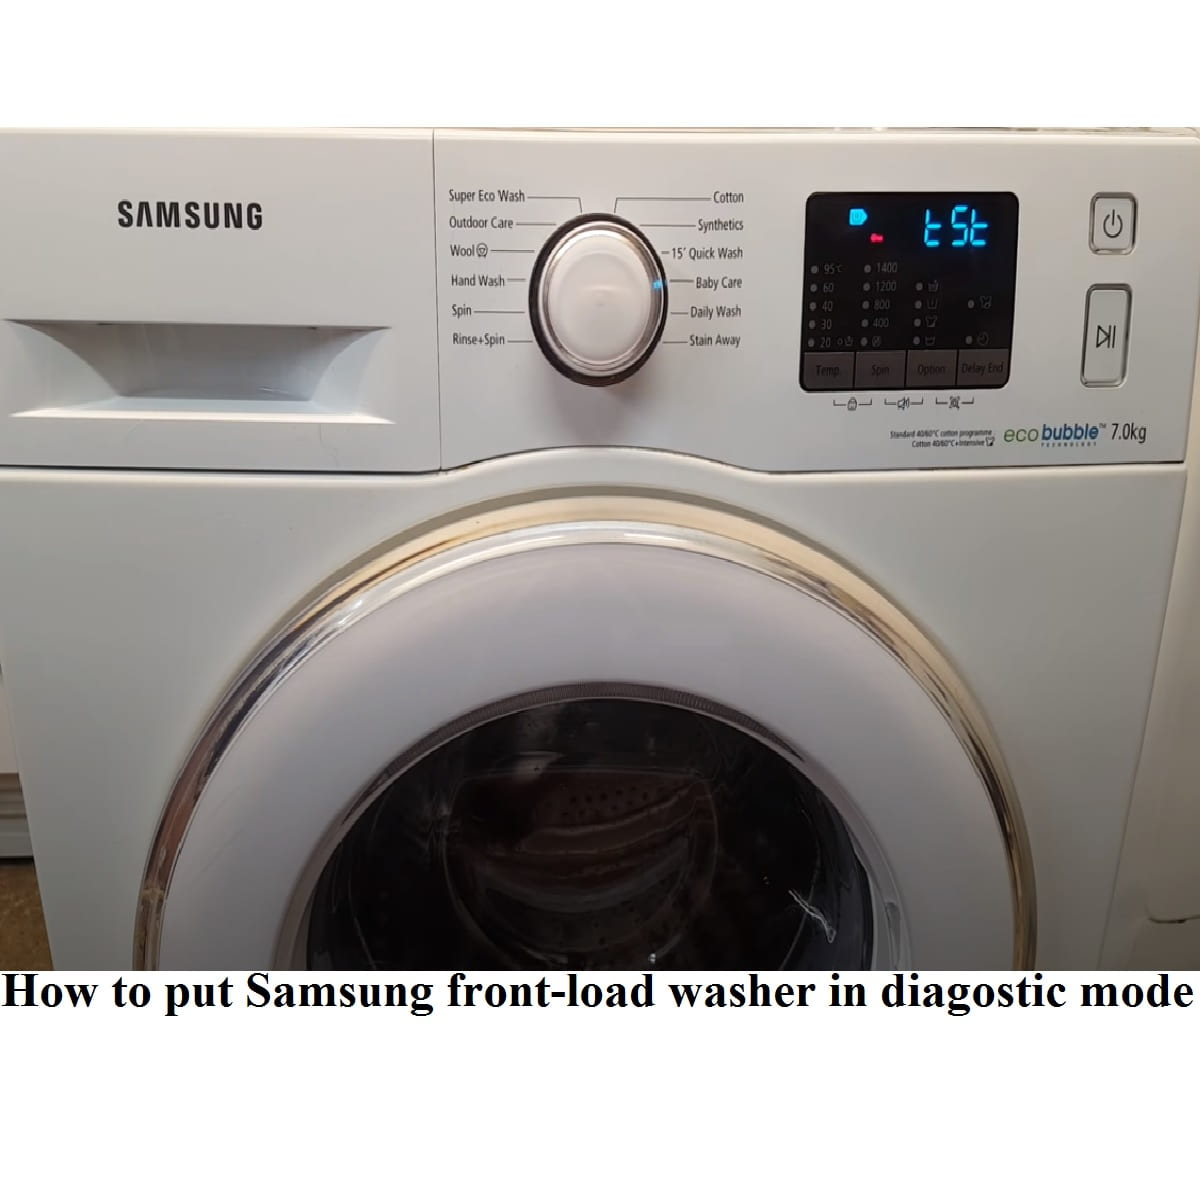 Samsung front load washer diagnostic mode